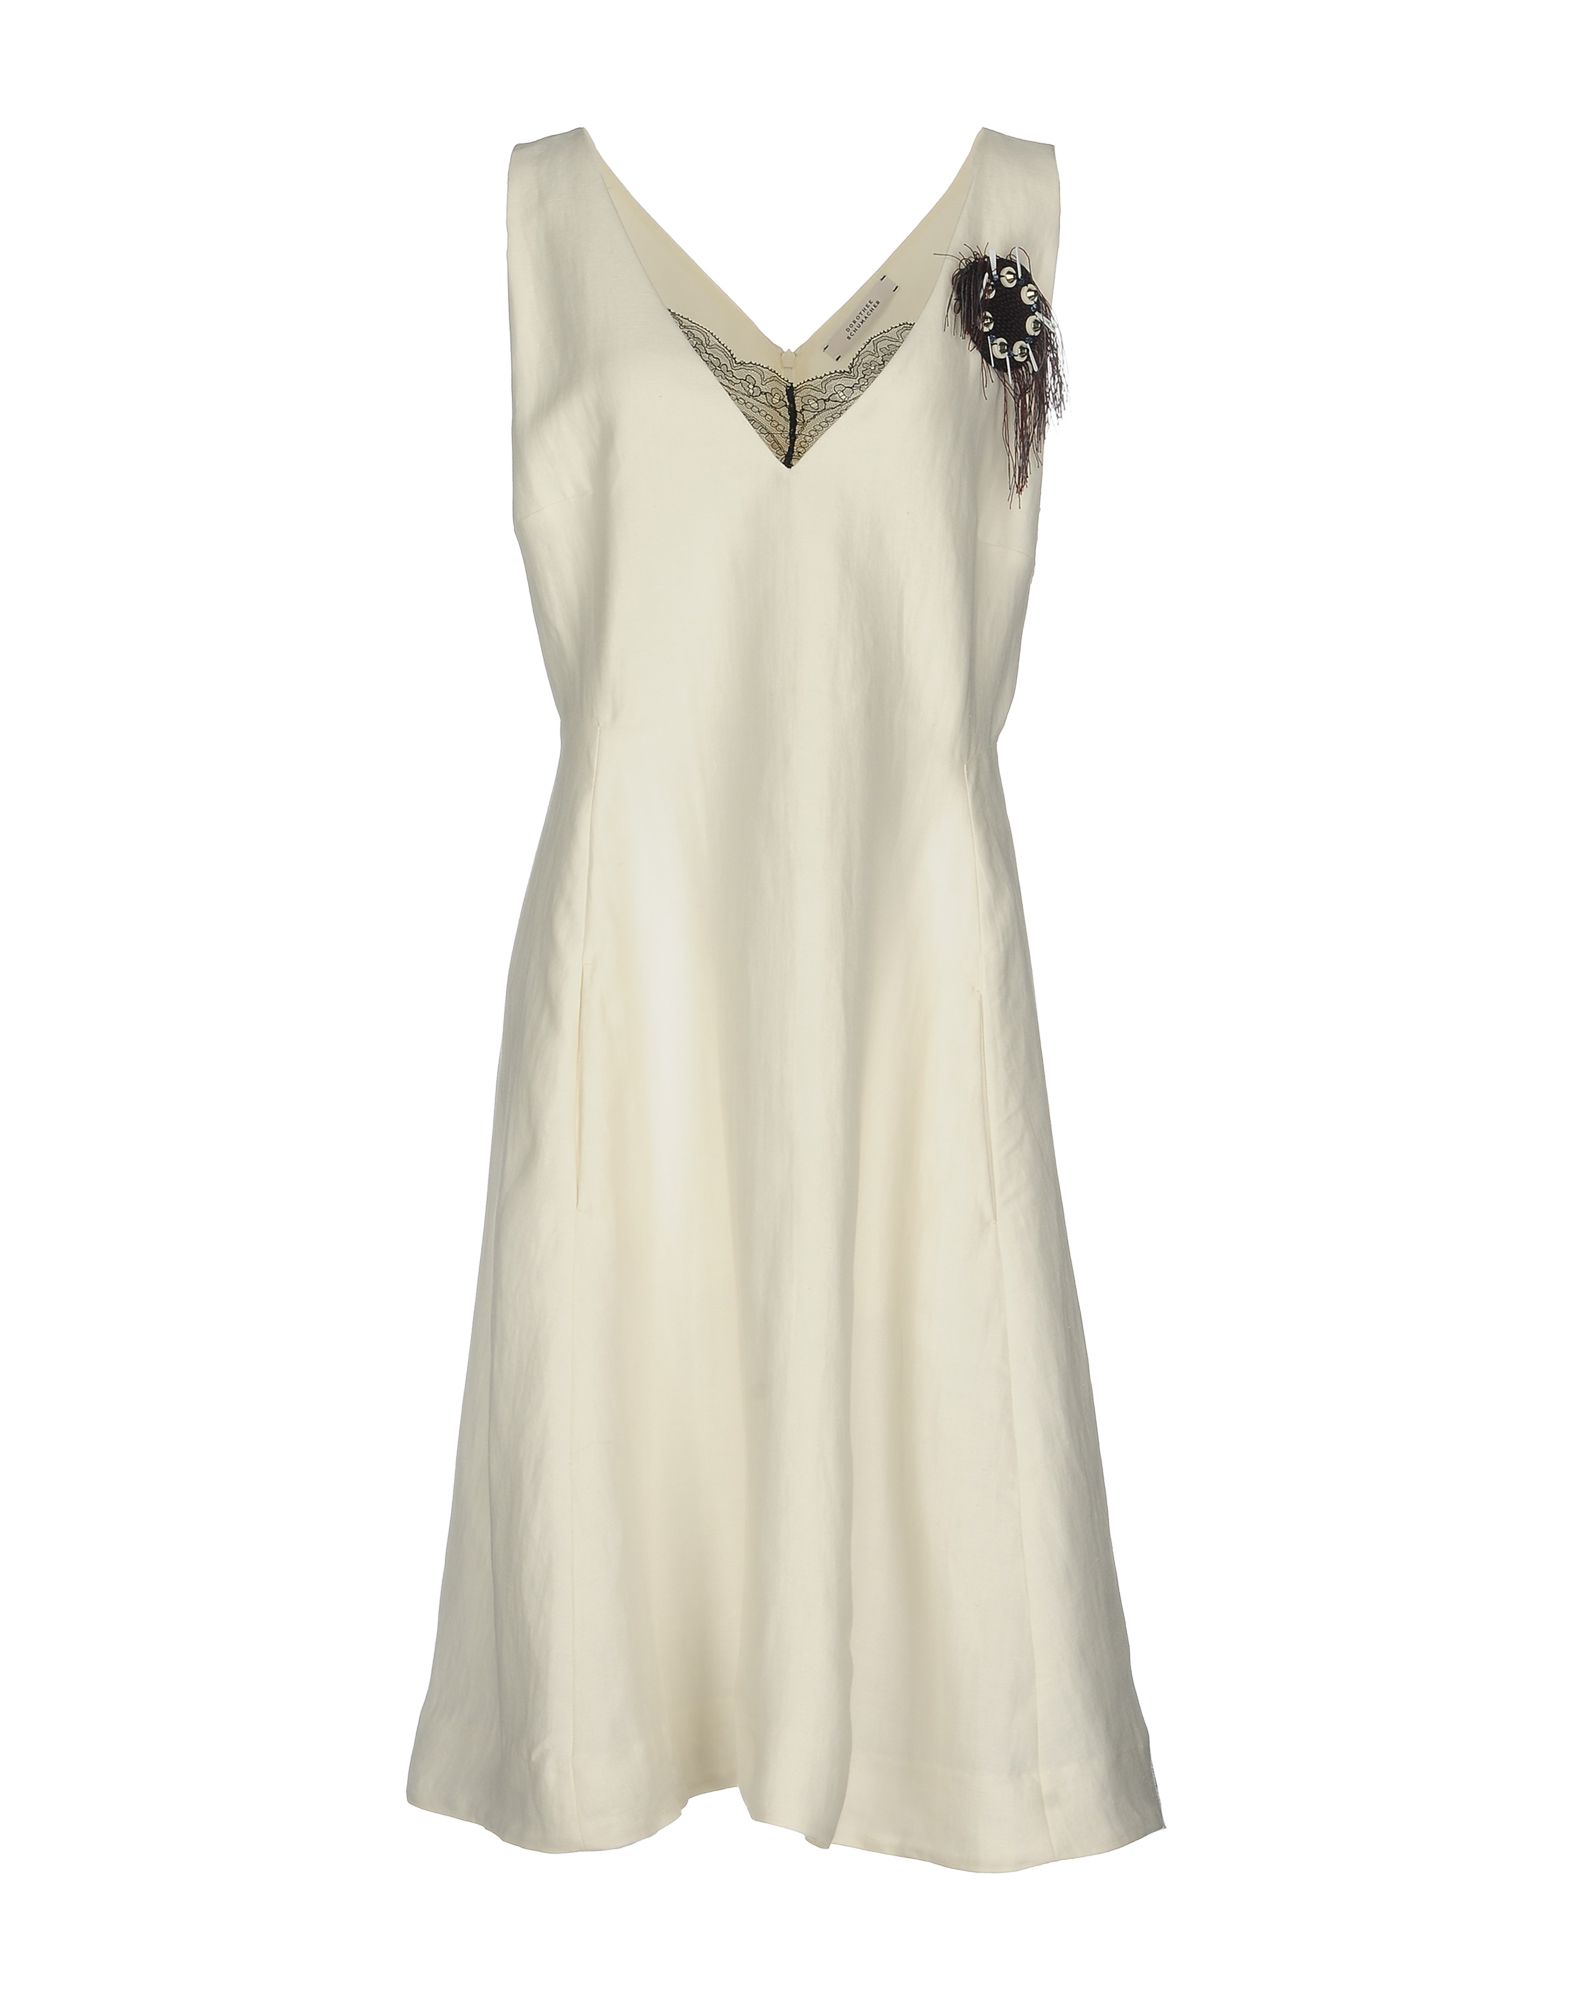 DOROTHEE SCHUMACHER KNEE-LENGTH DRESSES,34790128RU 6